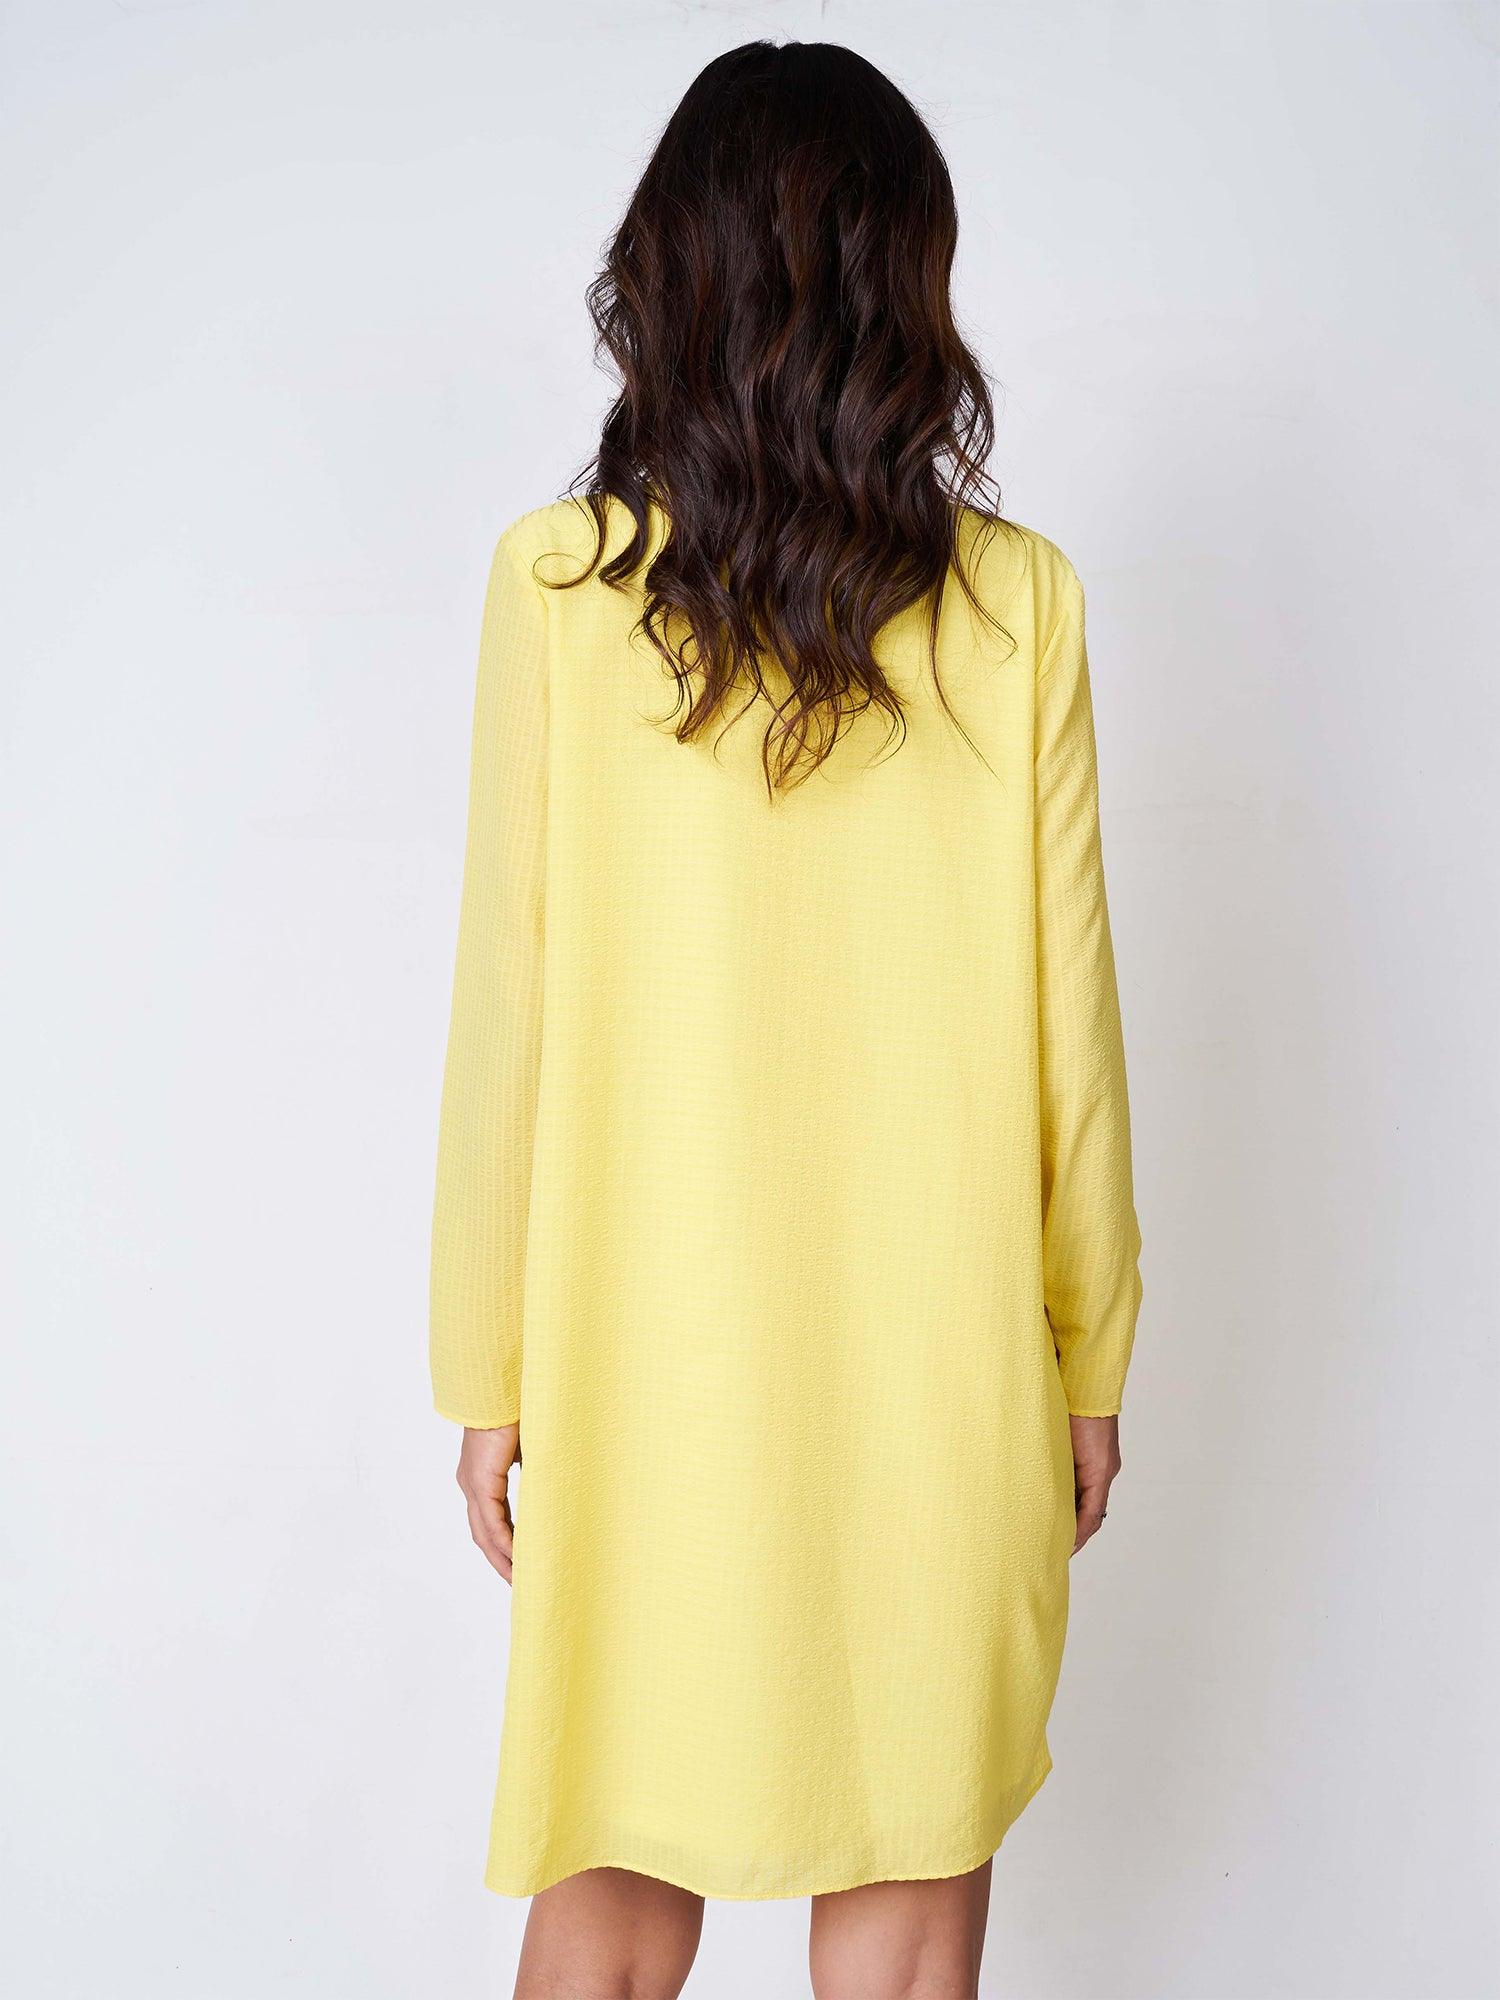 Flowing oversized yellow dress